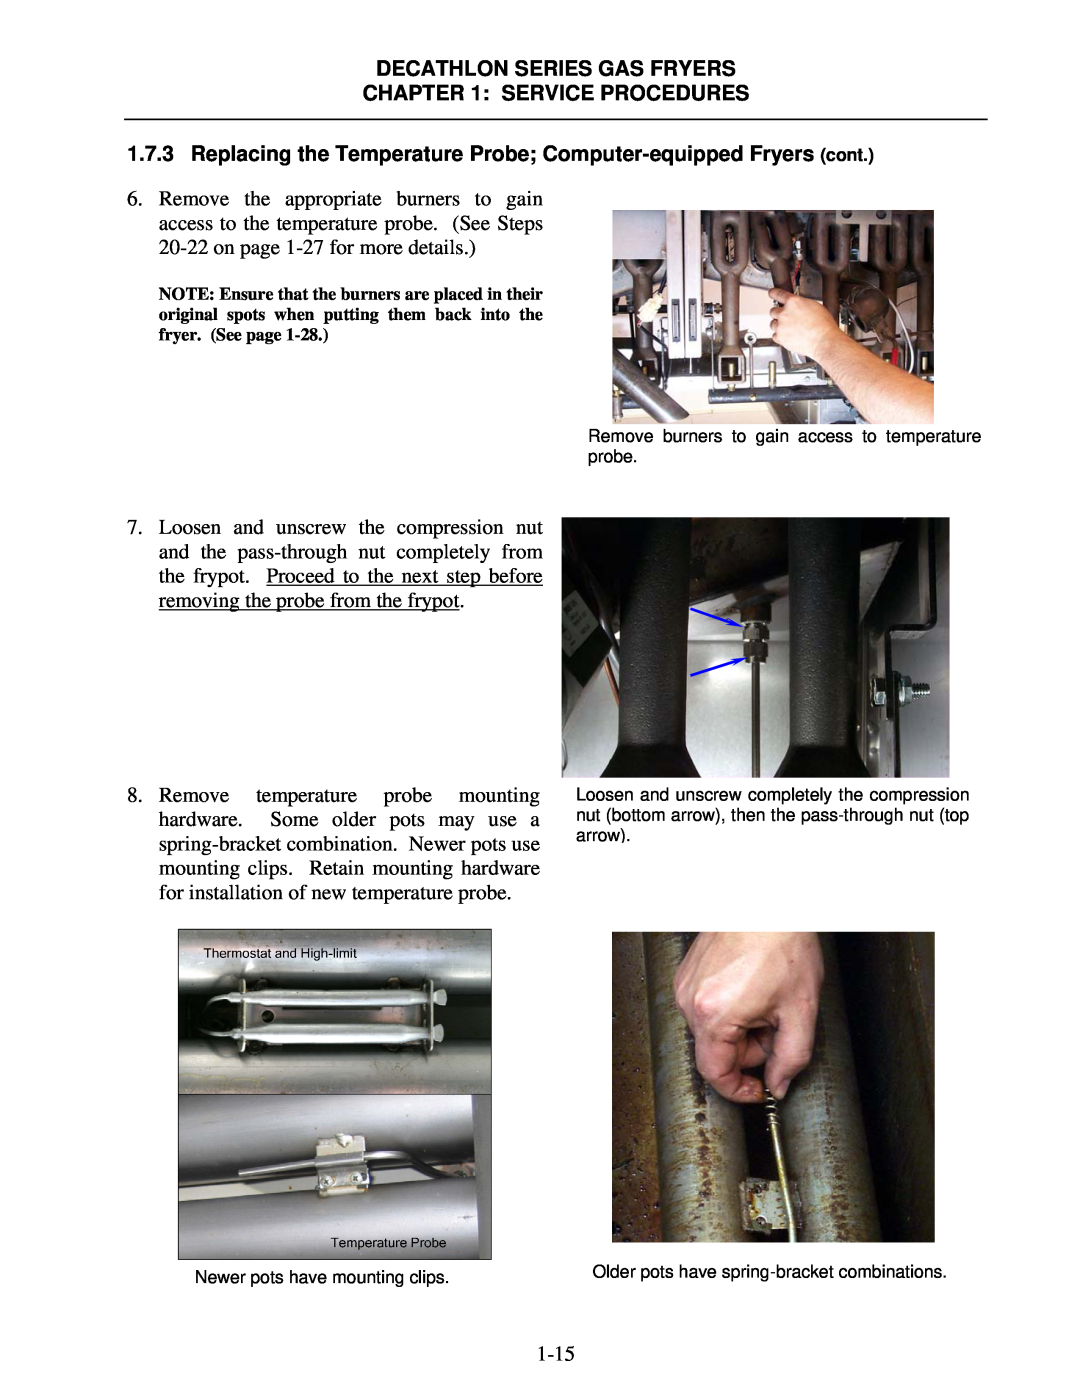 Frymaster FPD, SCFD manual Decathlon Series Gas Fryers, Service Procedures 